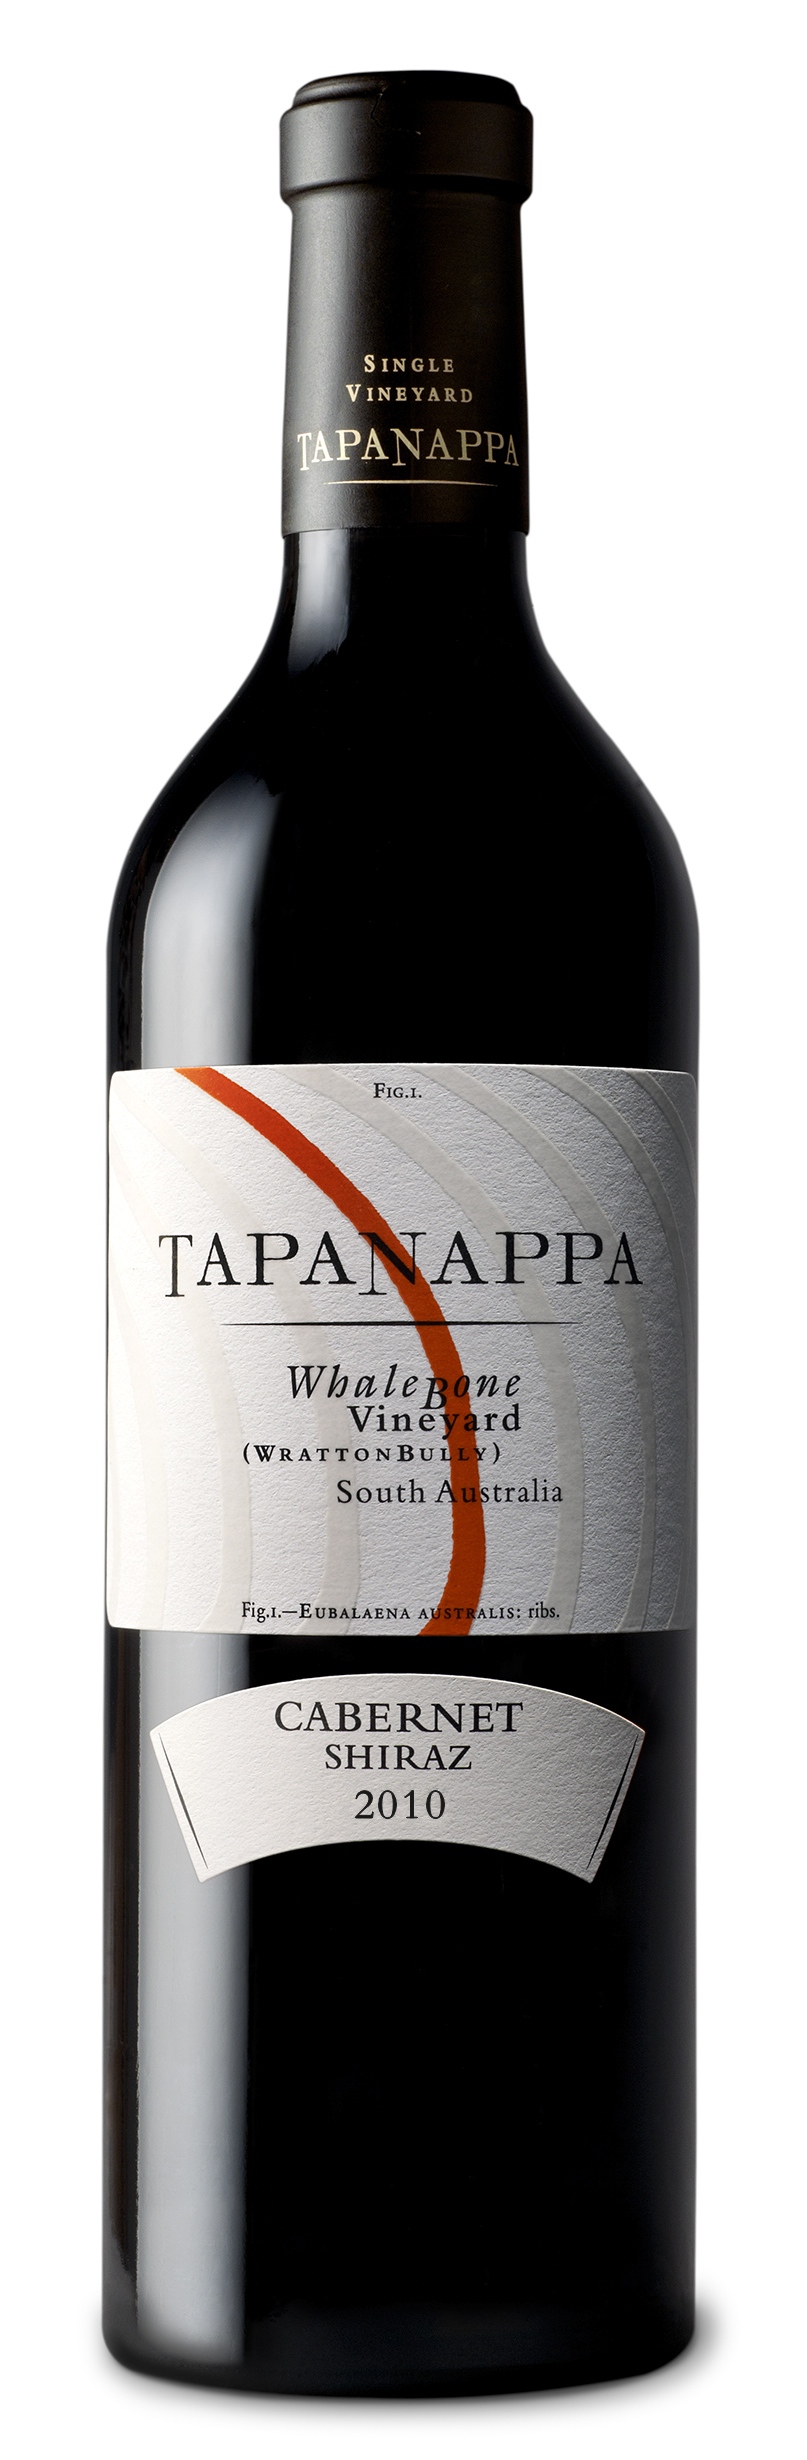 Tapanappa Whalebone Vineyard 2010 Cabernet Shiraz bottle shot